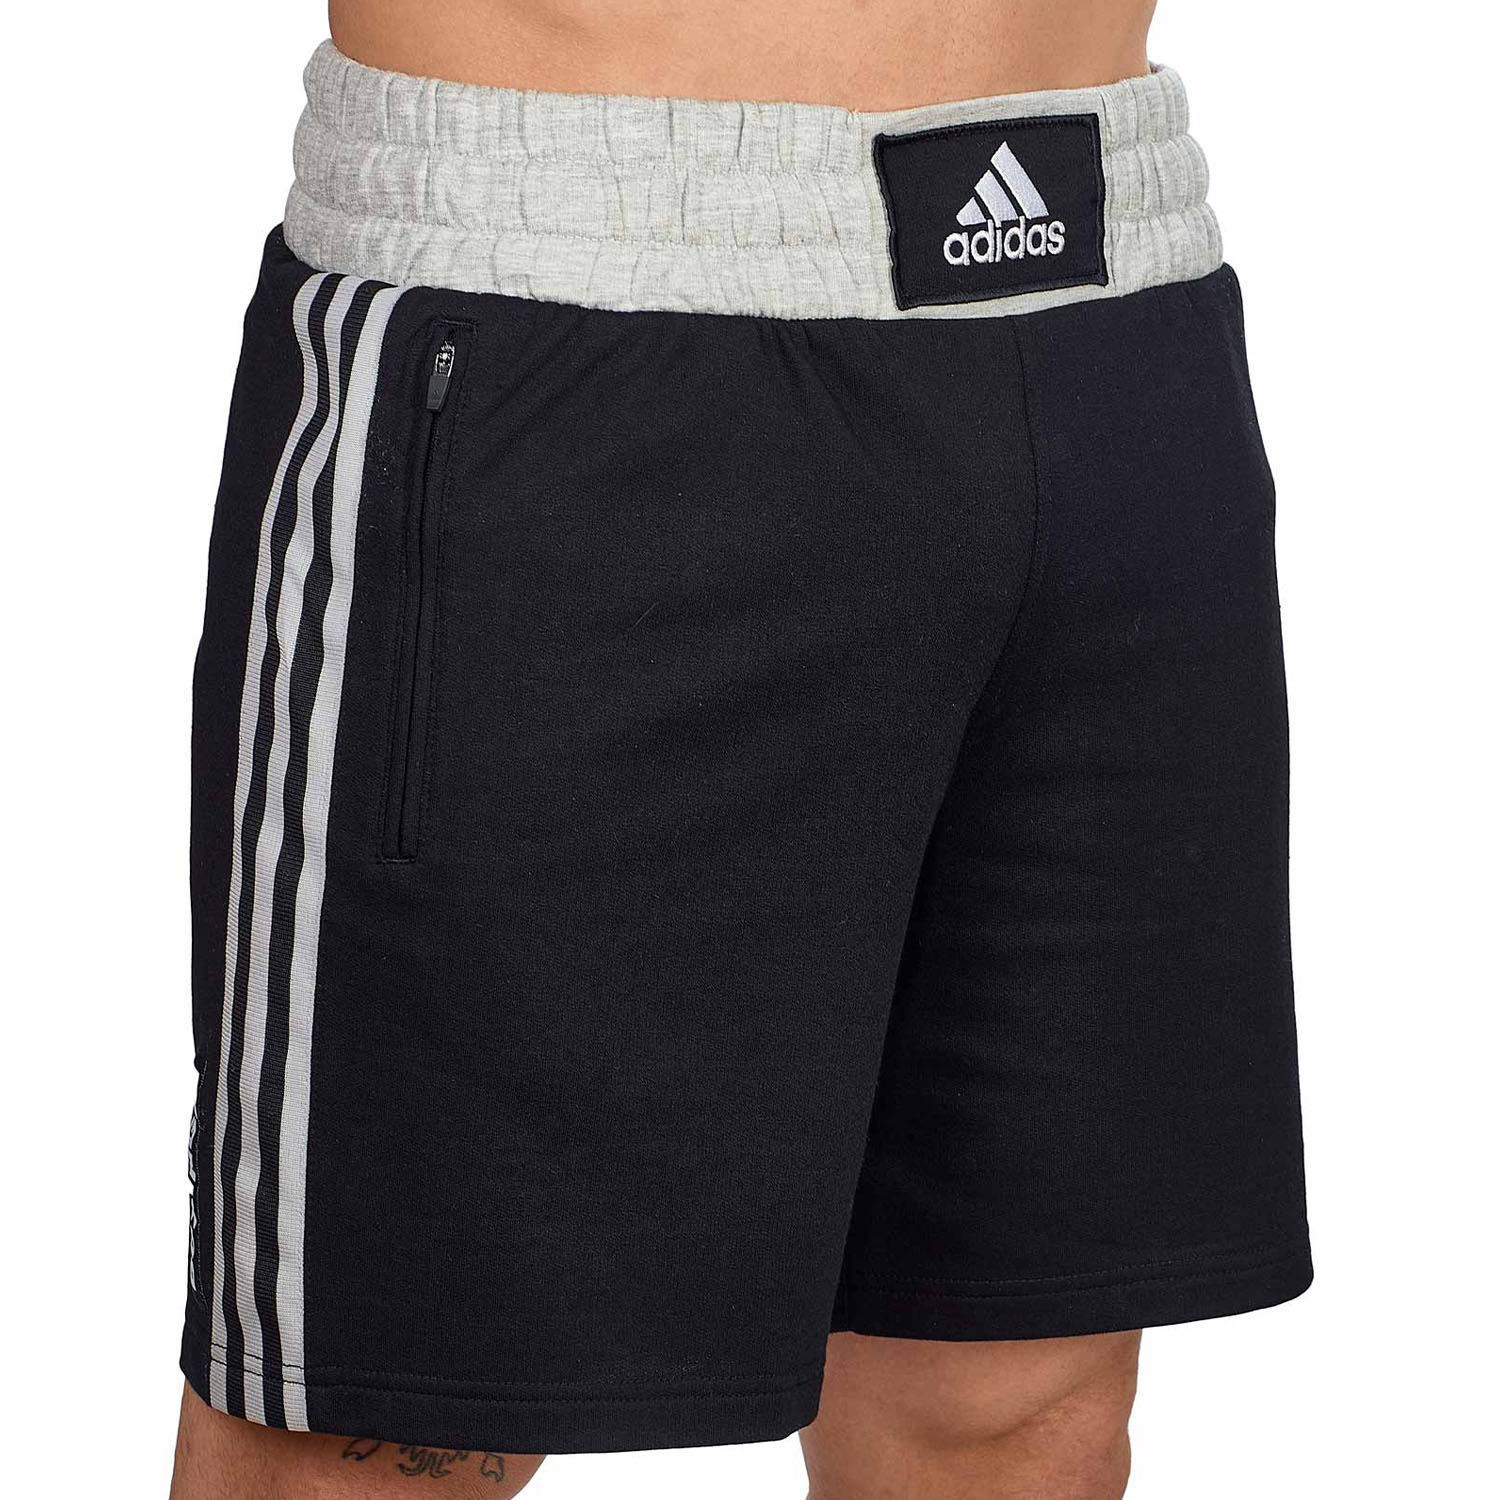 adidas Fitness Shorts, Boxwear Traditional, black-white, L